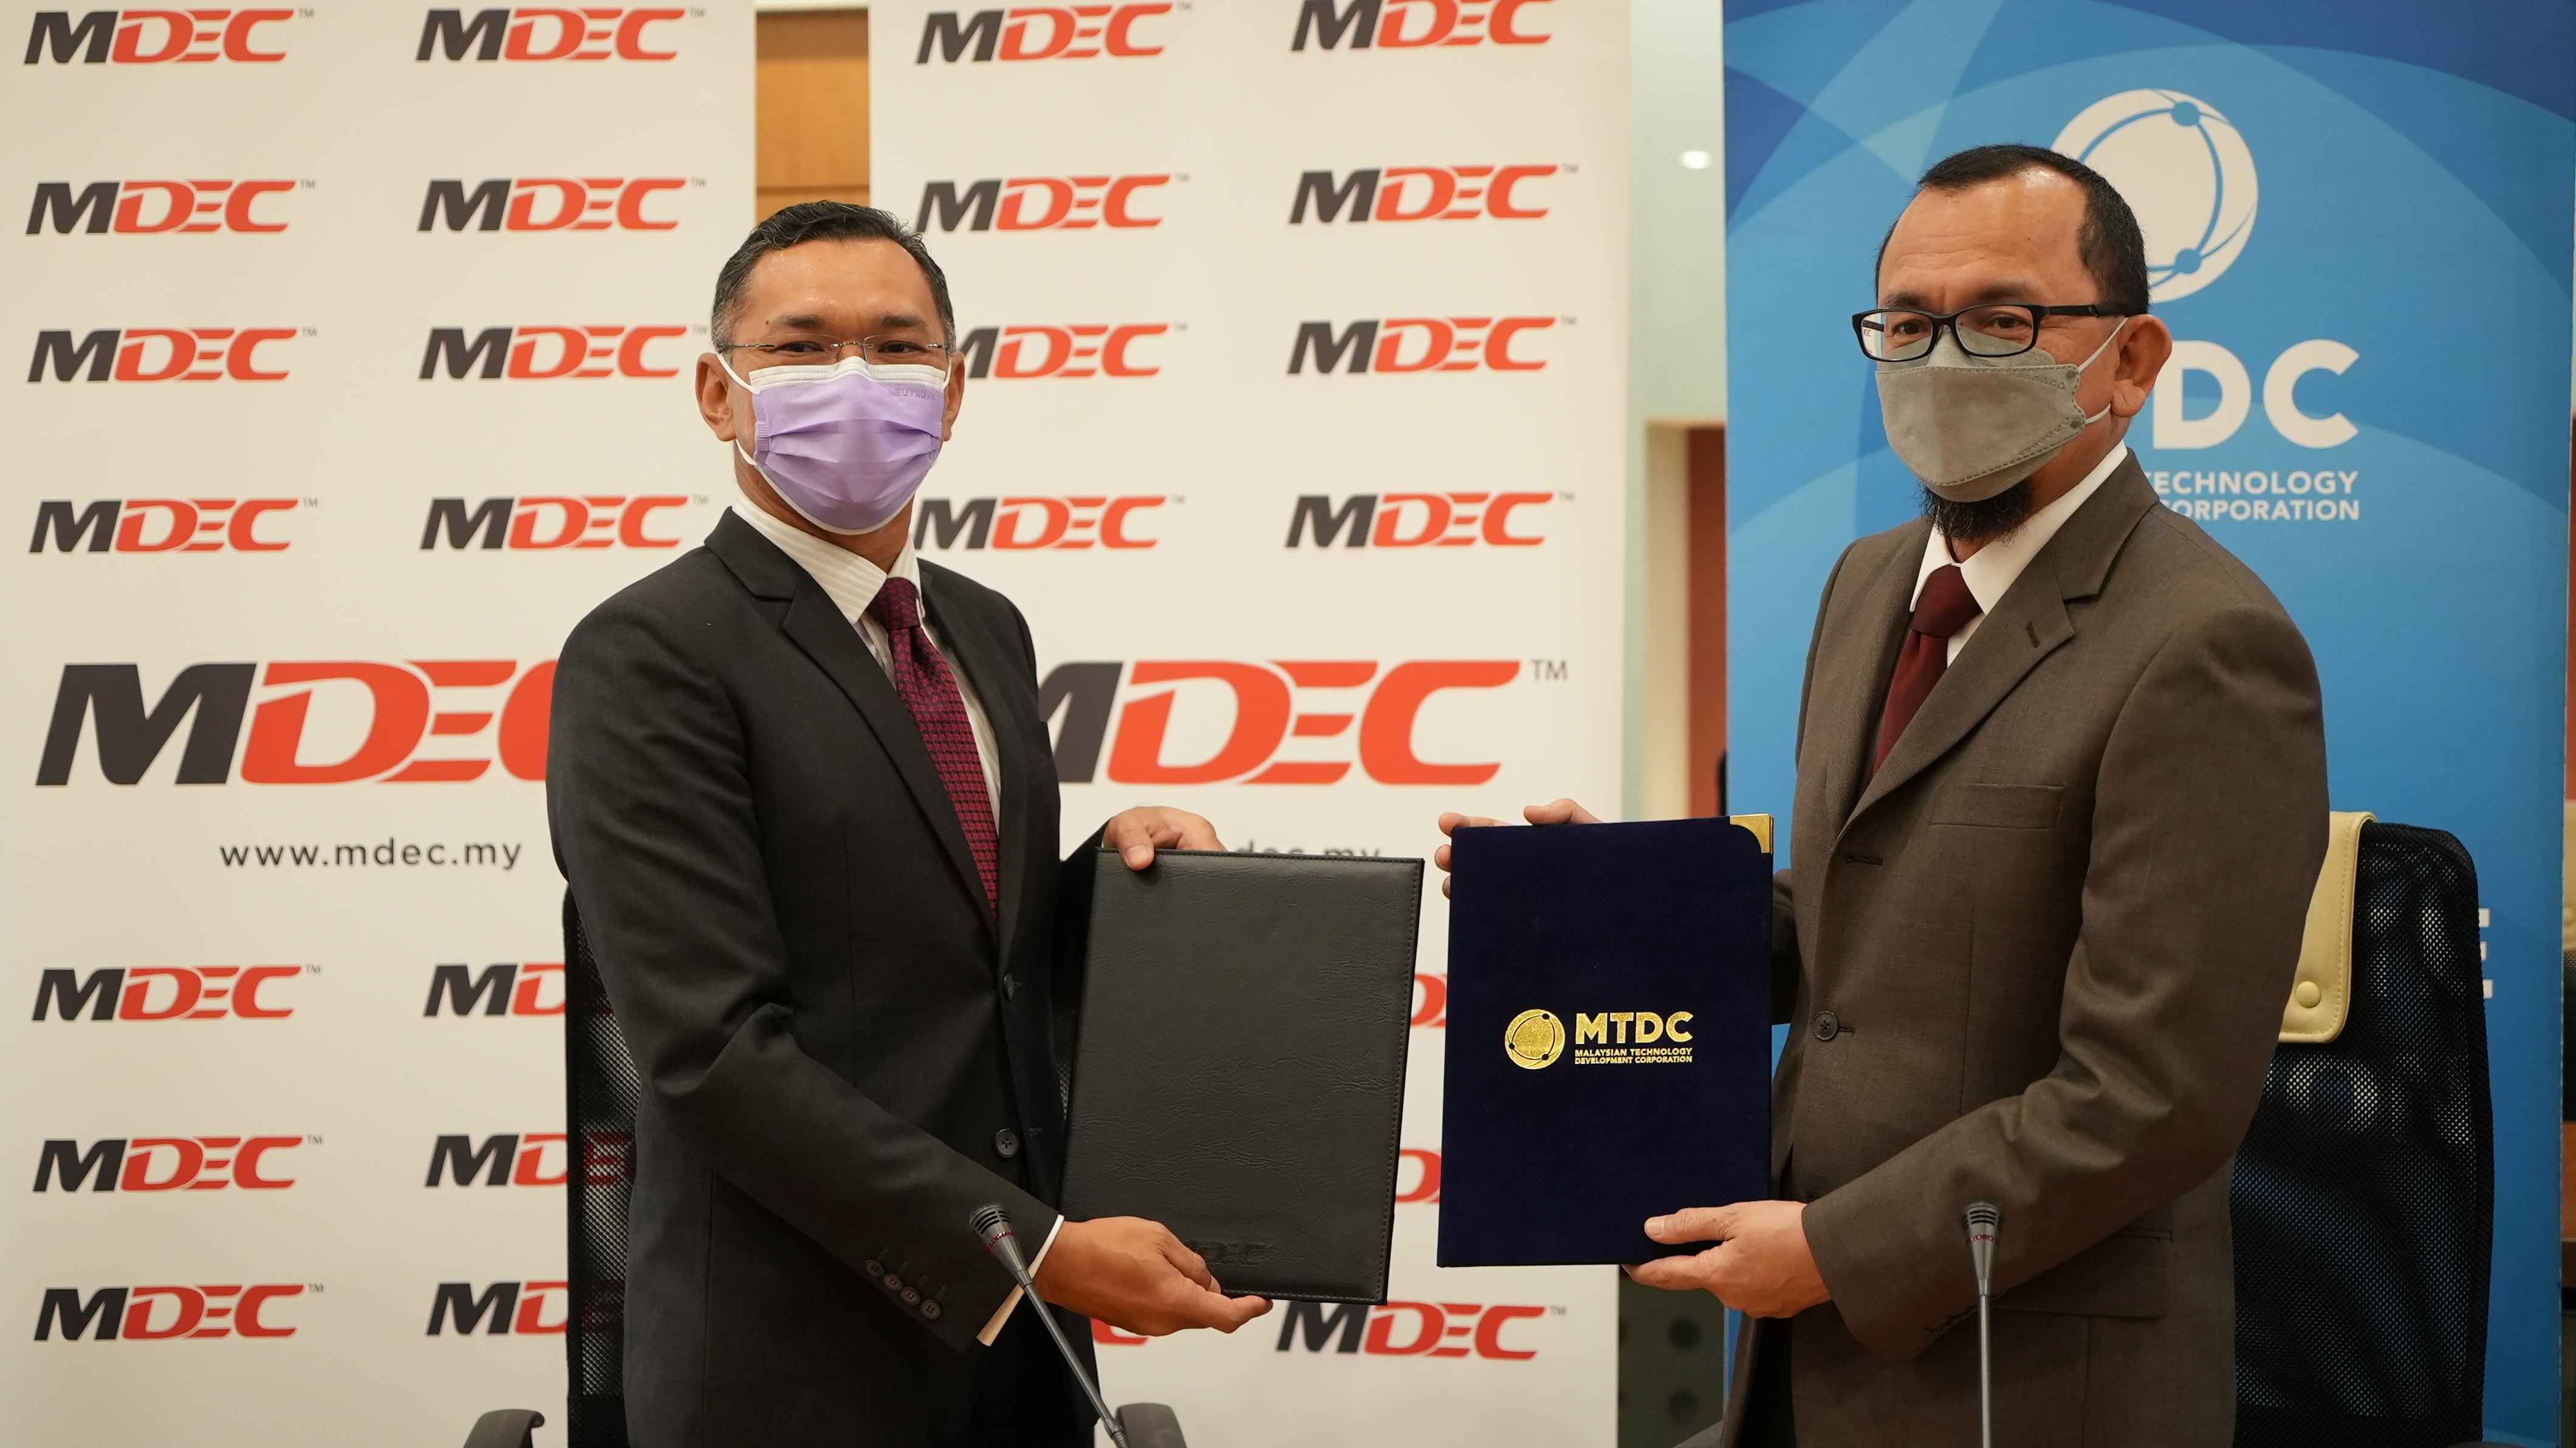 Mahadhir Aziz (left), CEO of MDEC with Norhalim Yunus, CEO of MTDC.